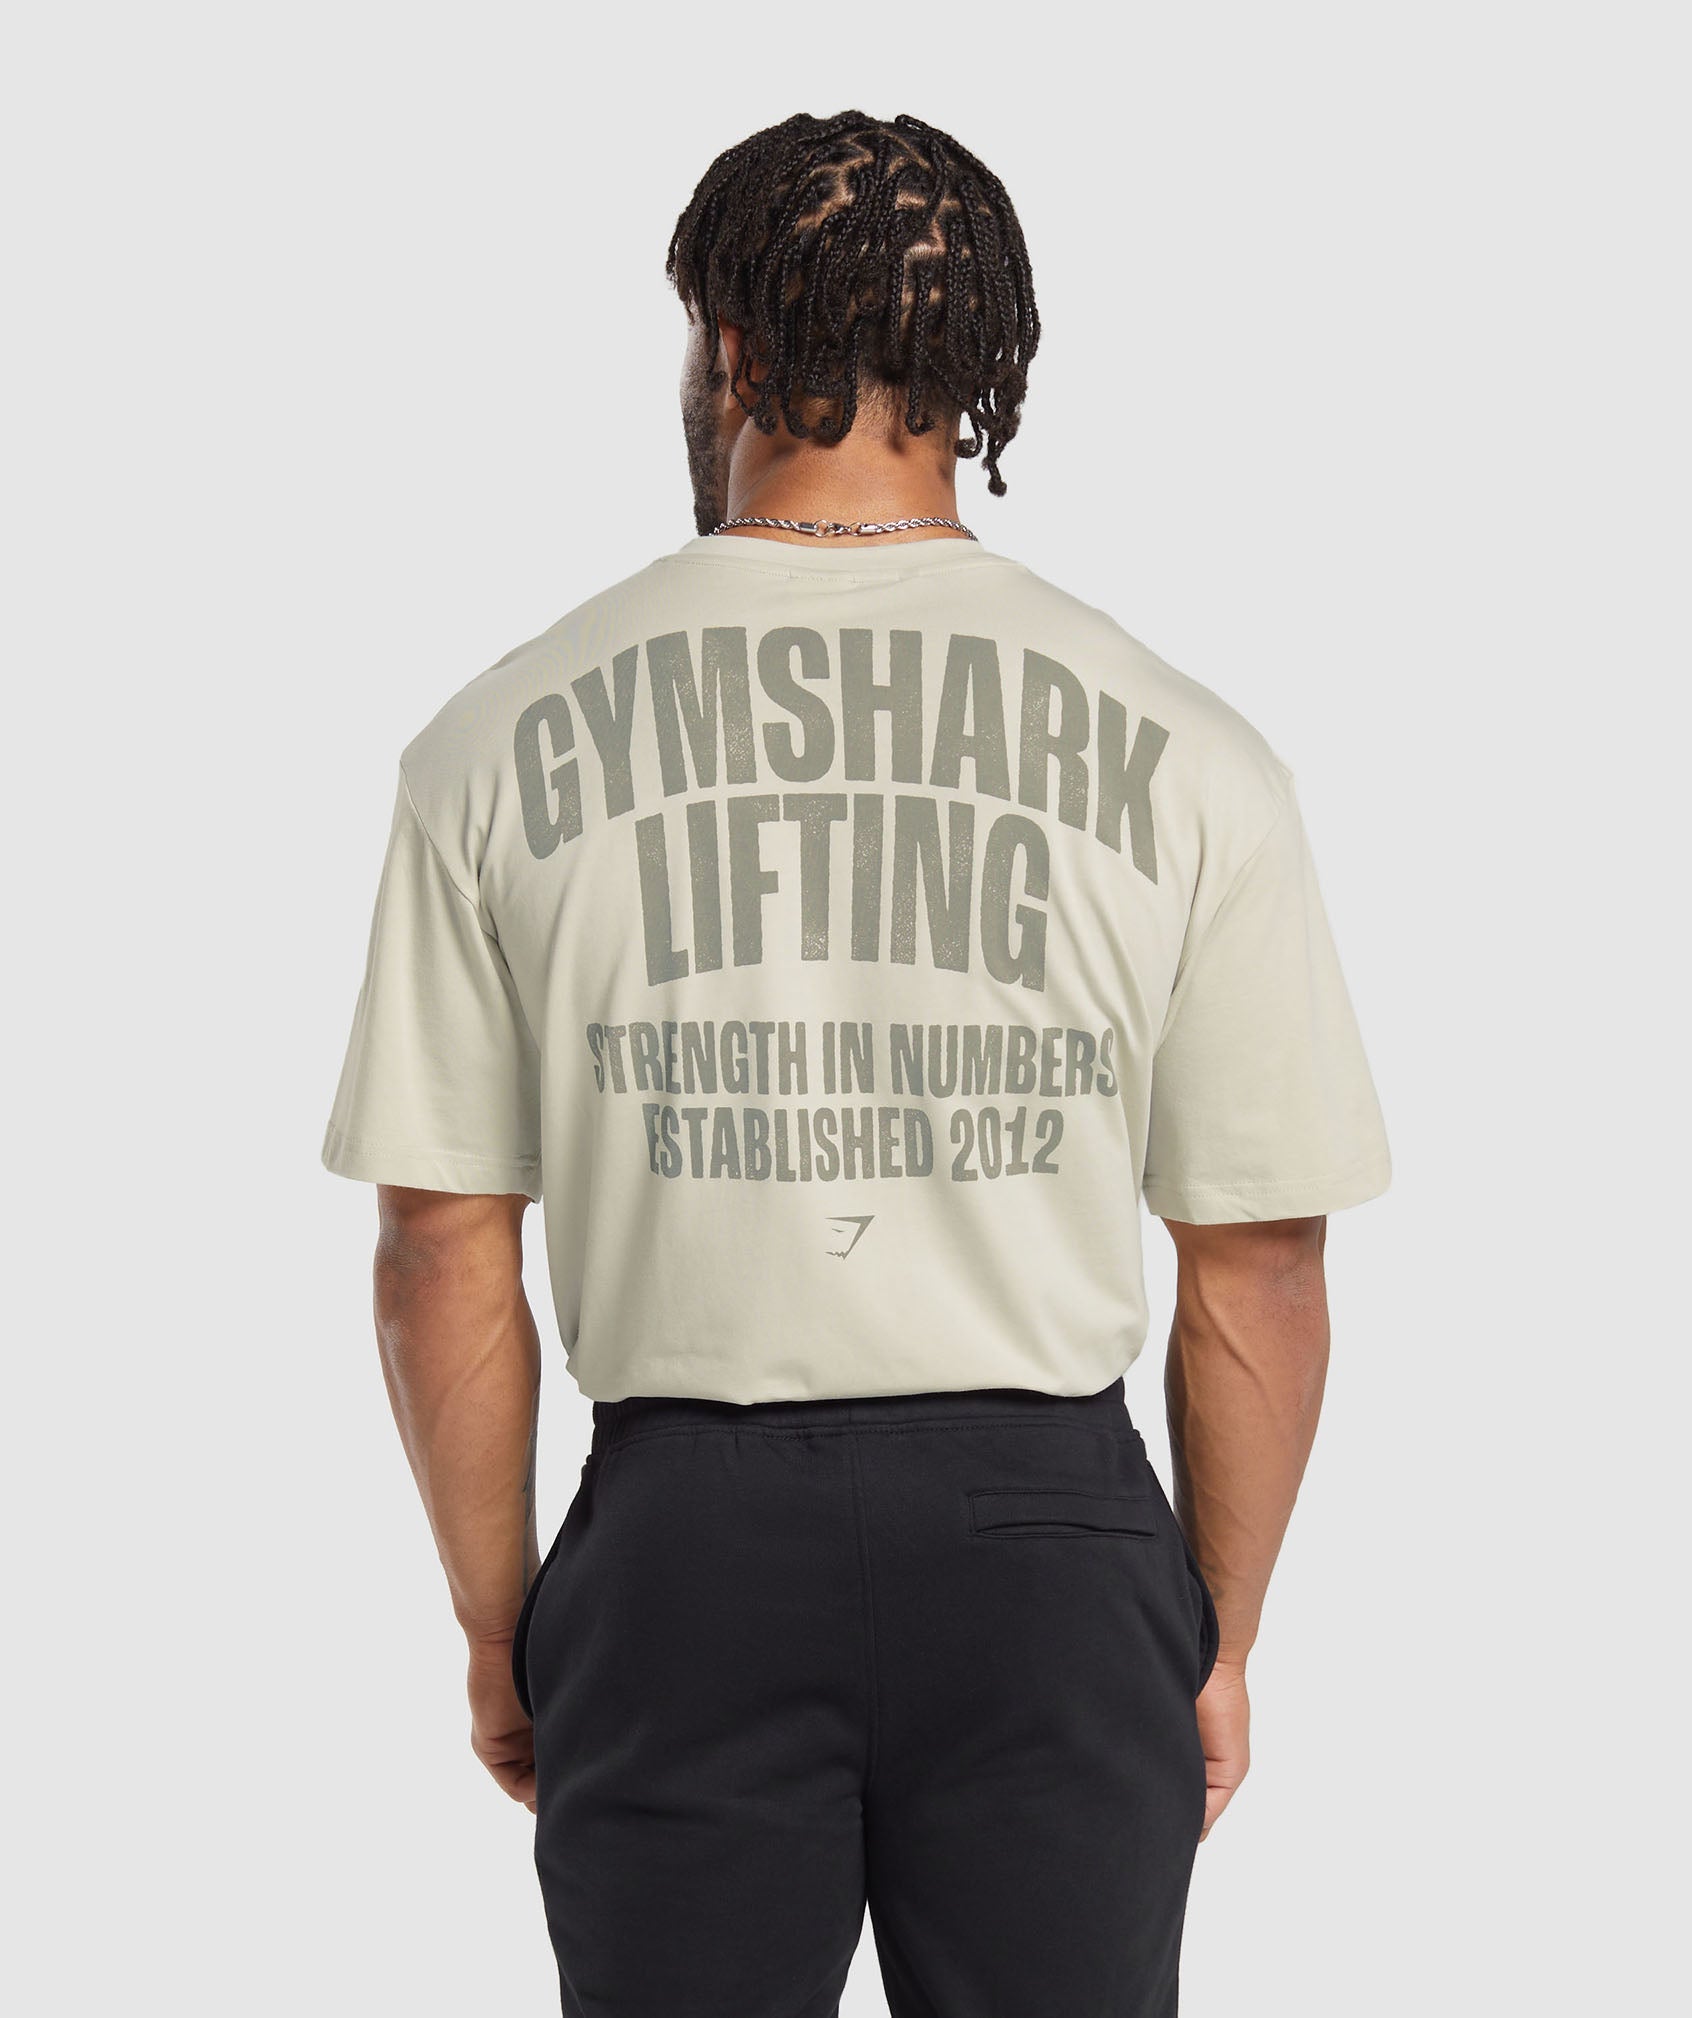 Gymshark Lifting T-Shirt - Pebble Grey